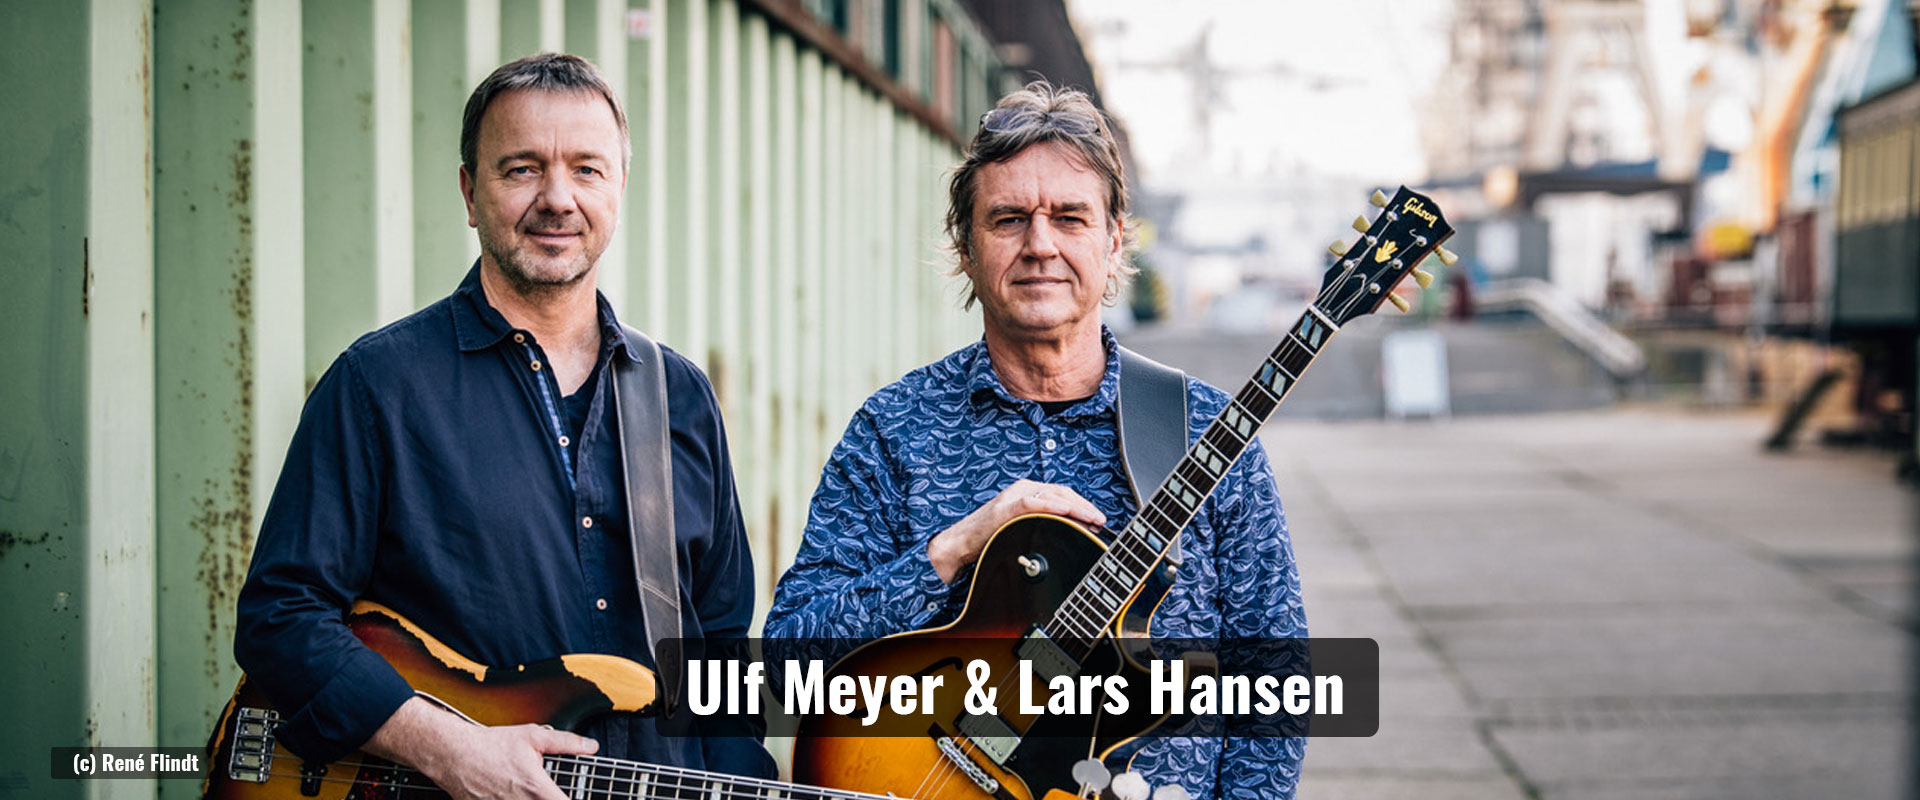 Ulf Meyer & Lars Hansen